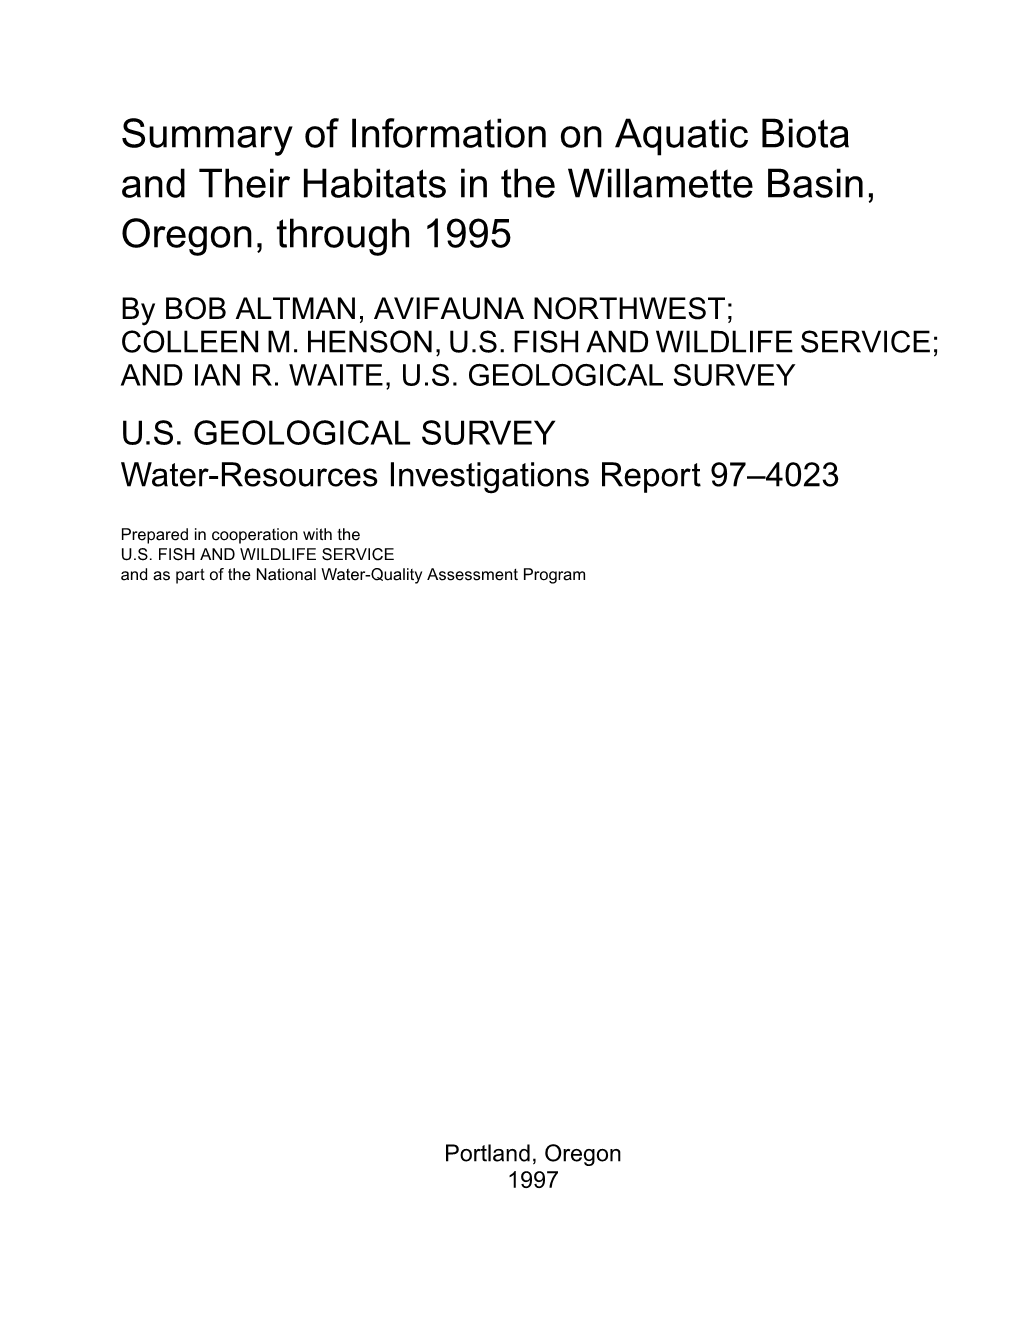 Summary of Information on Aquatic Biota and Their Habitats in the Willamette Basin, Oregon, Through 1995